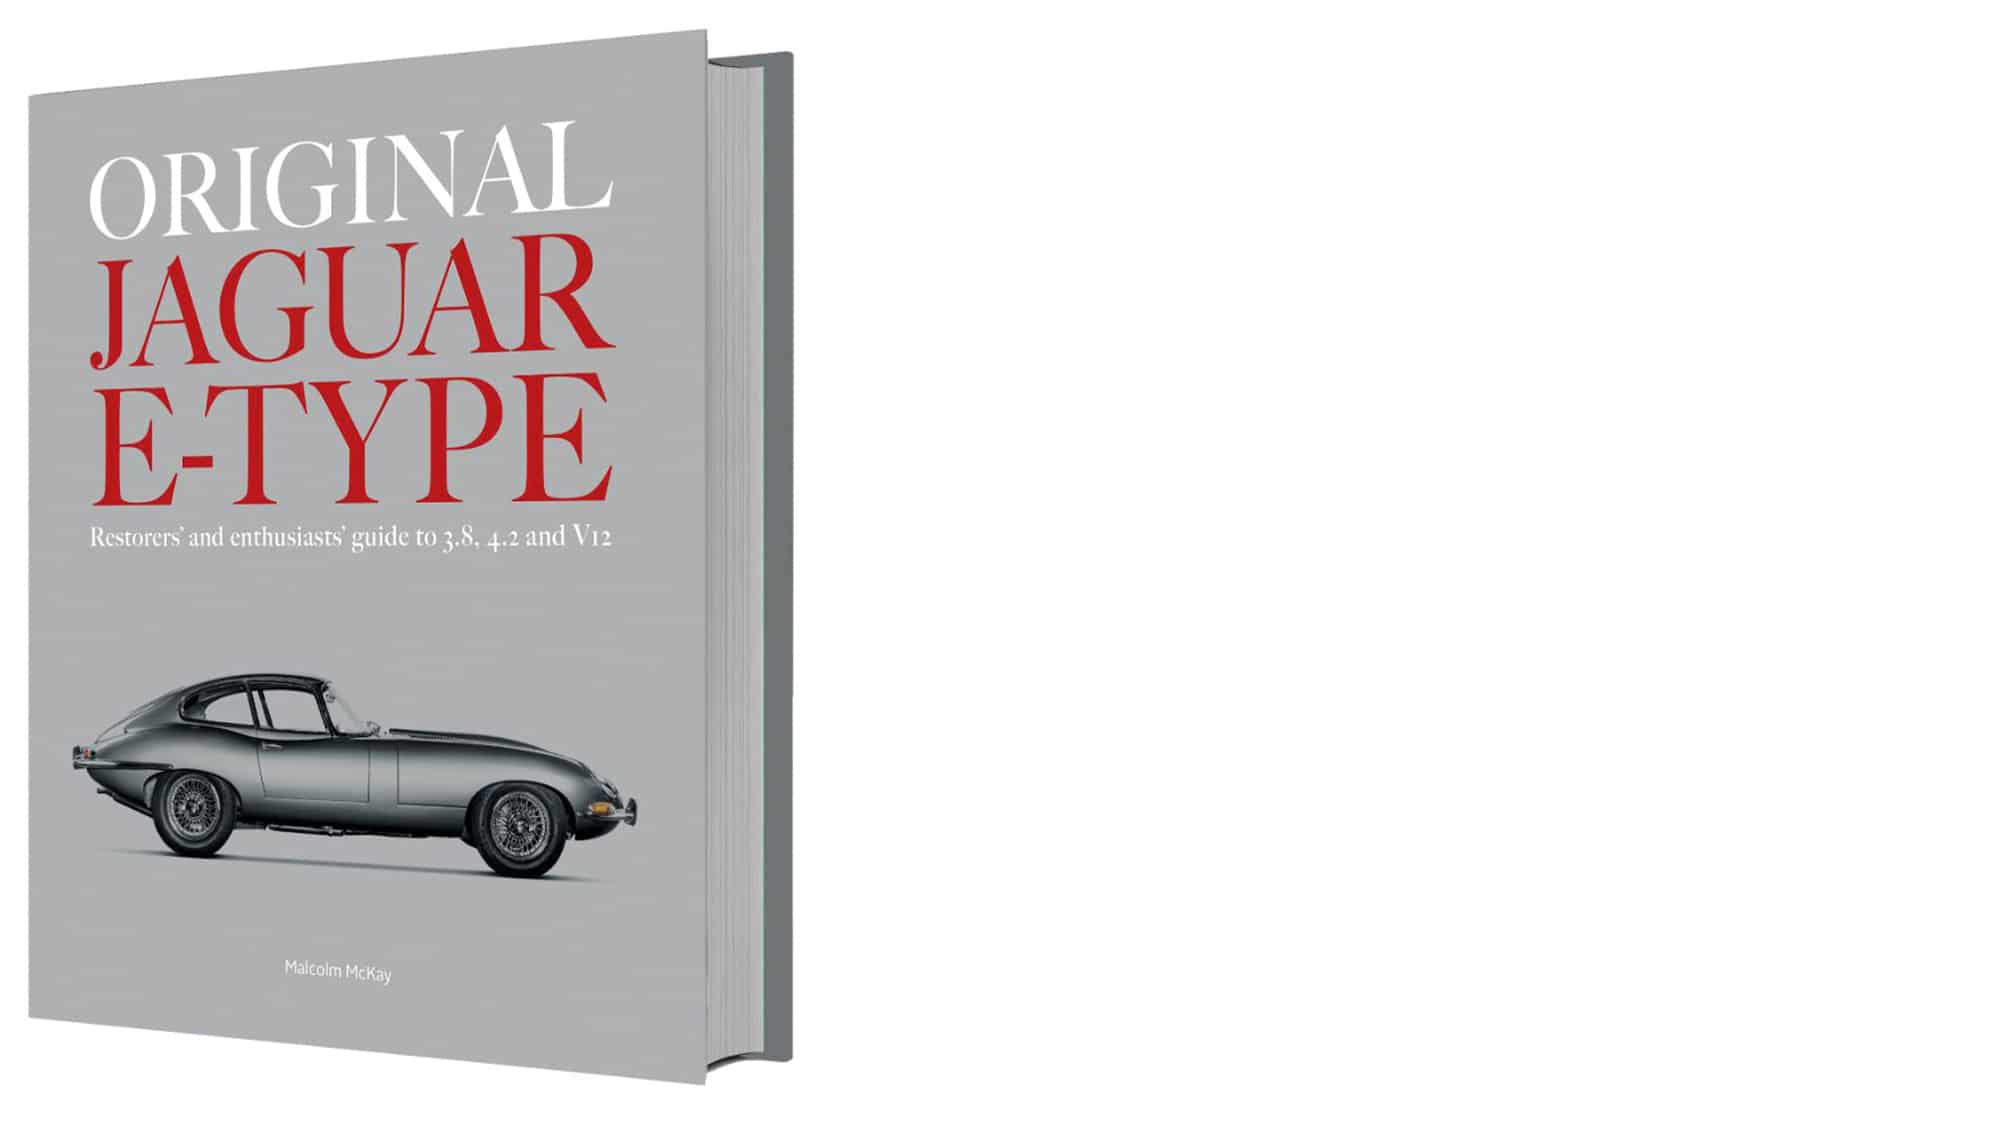 Jaguar E type book